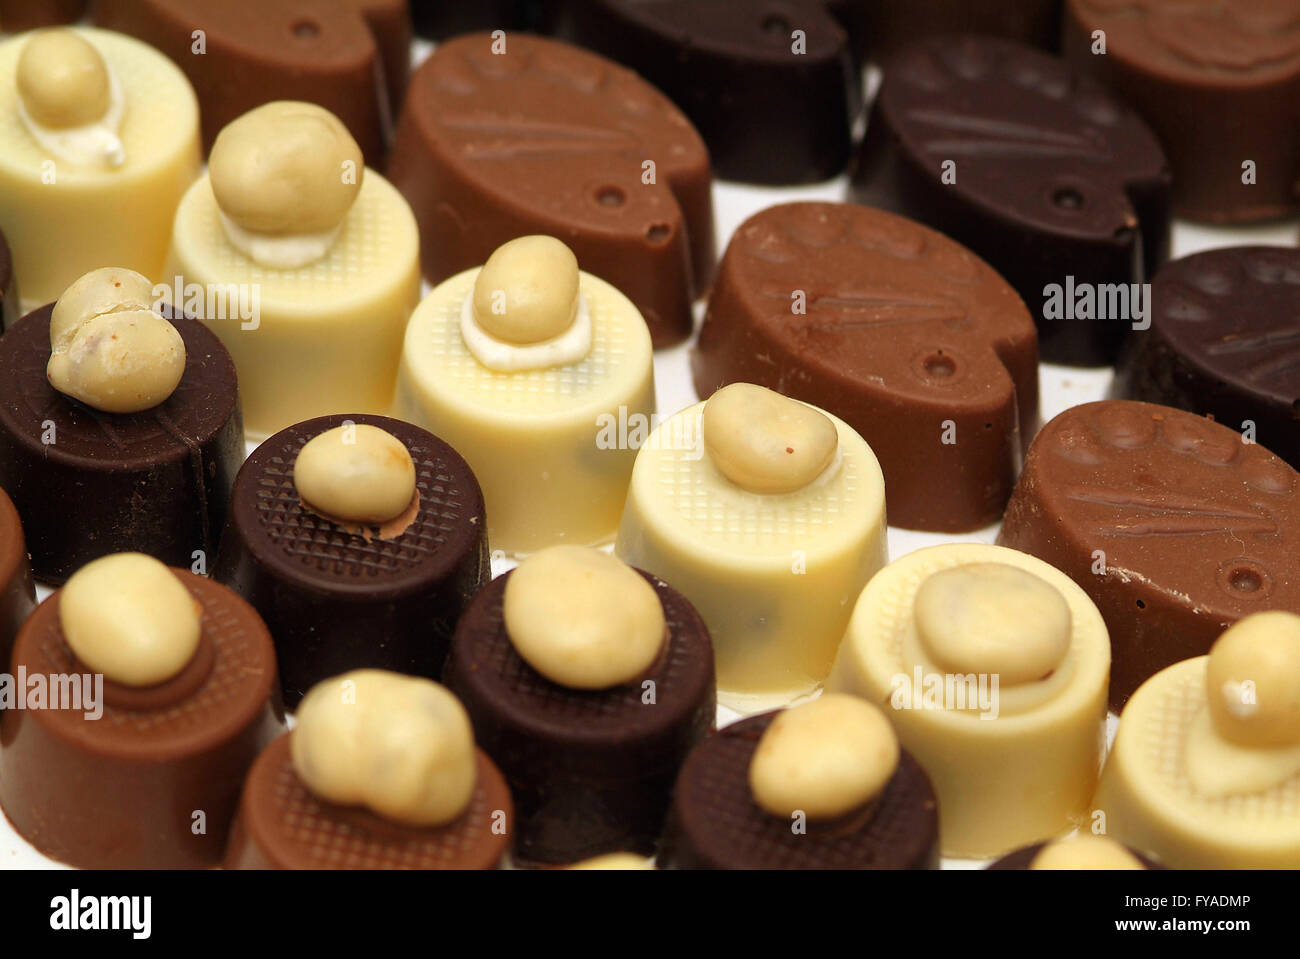 Caminantes Chocolate Emporium,Ilfracombe,UK un chocolatero tradicional confitería caramelos gobstoppers azúcar alimentos hechos a mano Foto de stock